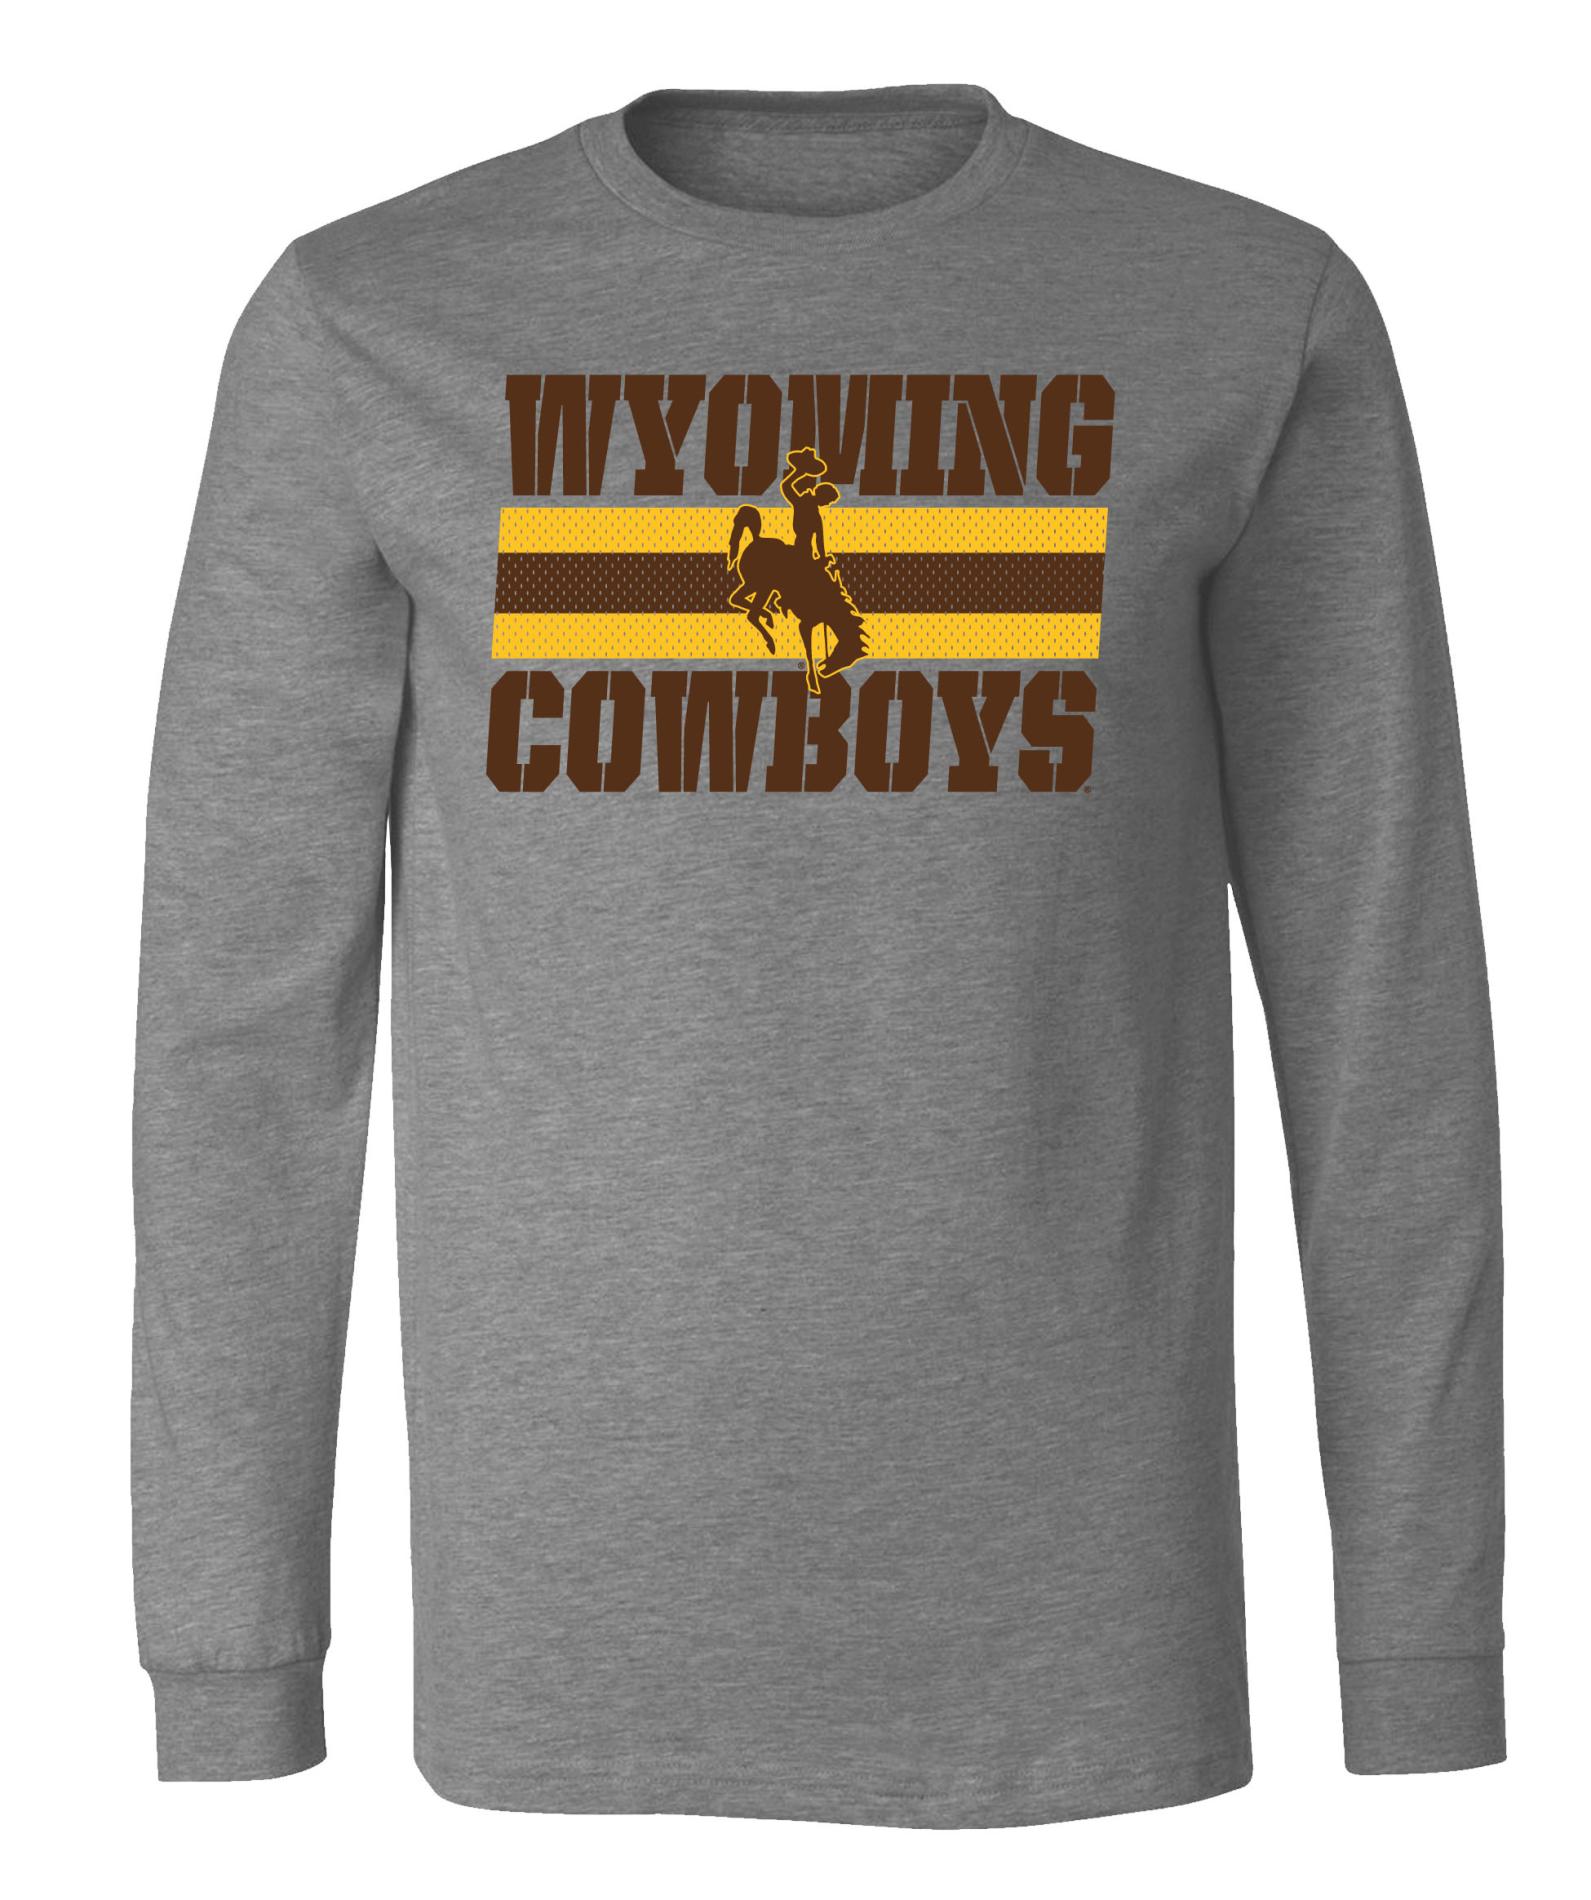 NCAA Boys' Long-Sleeve T-Shirt - Wyoming Cowboys